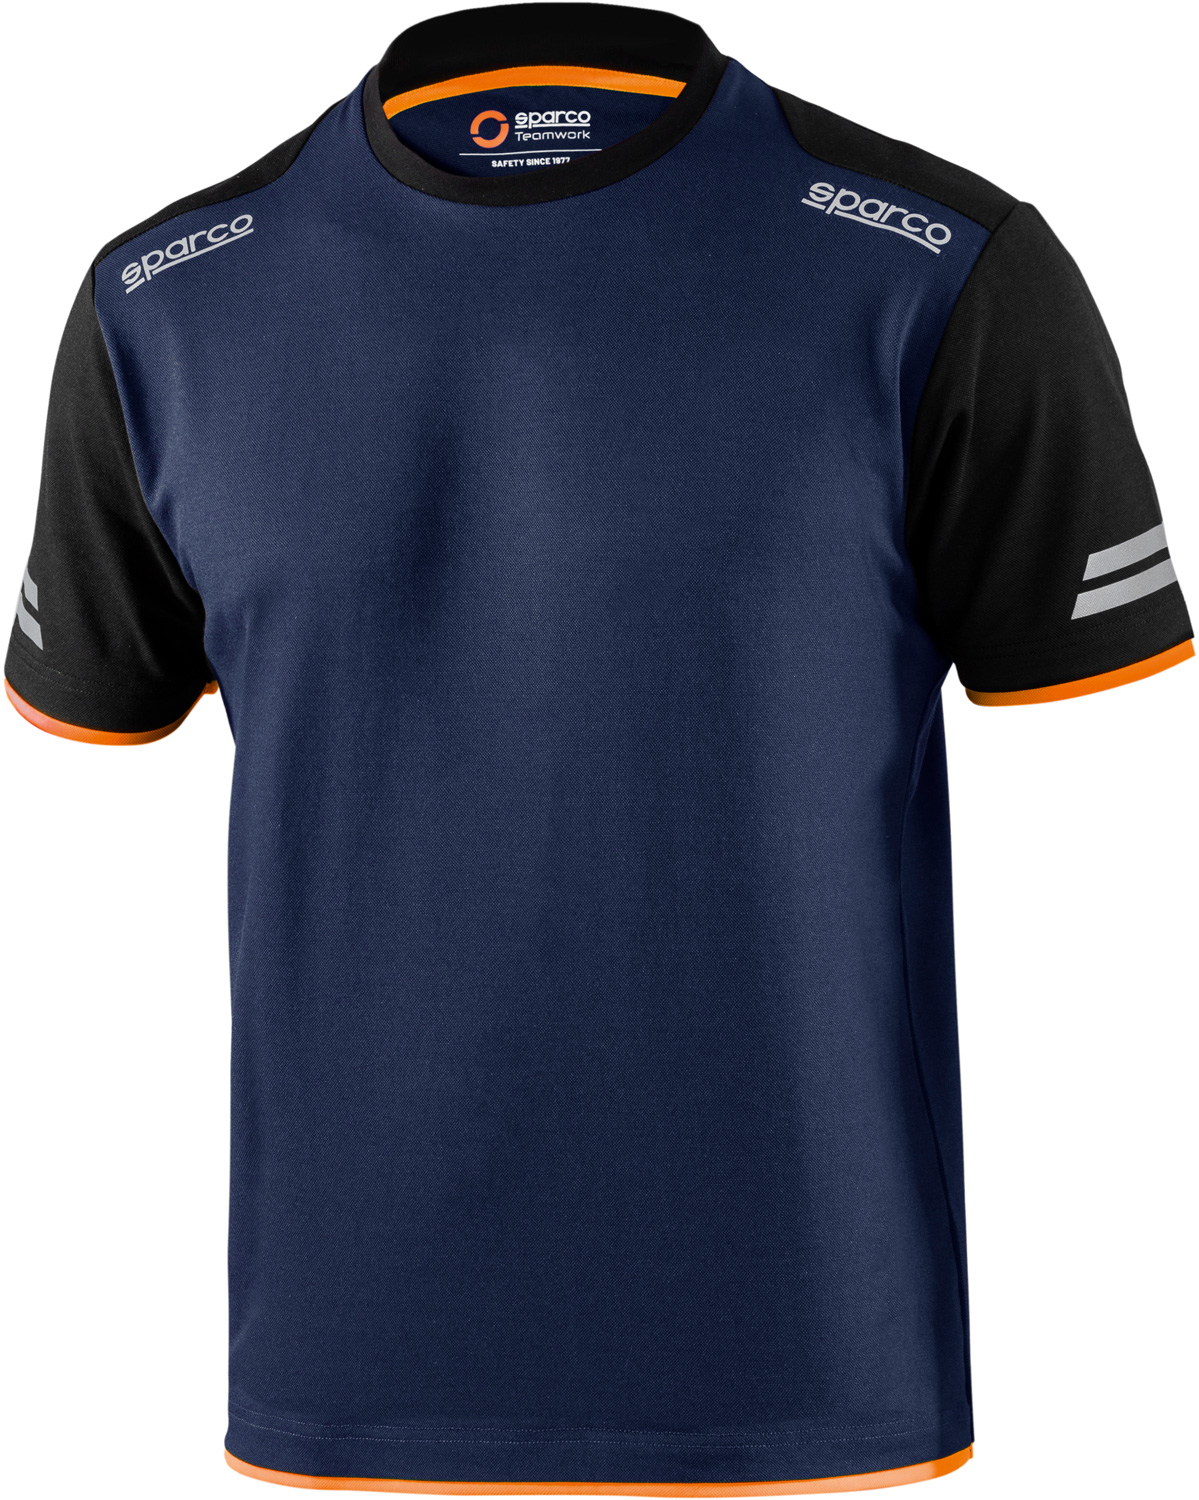 Футболка SPARCO TECH цвет темно синий/оранжевый